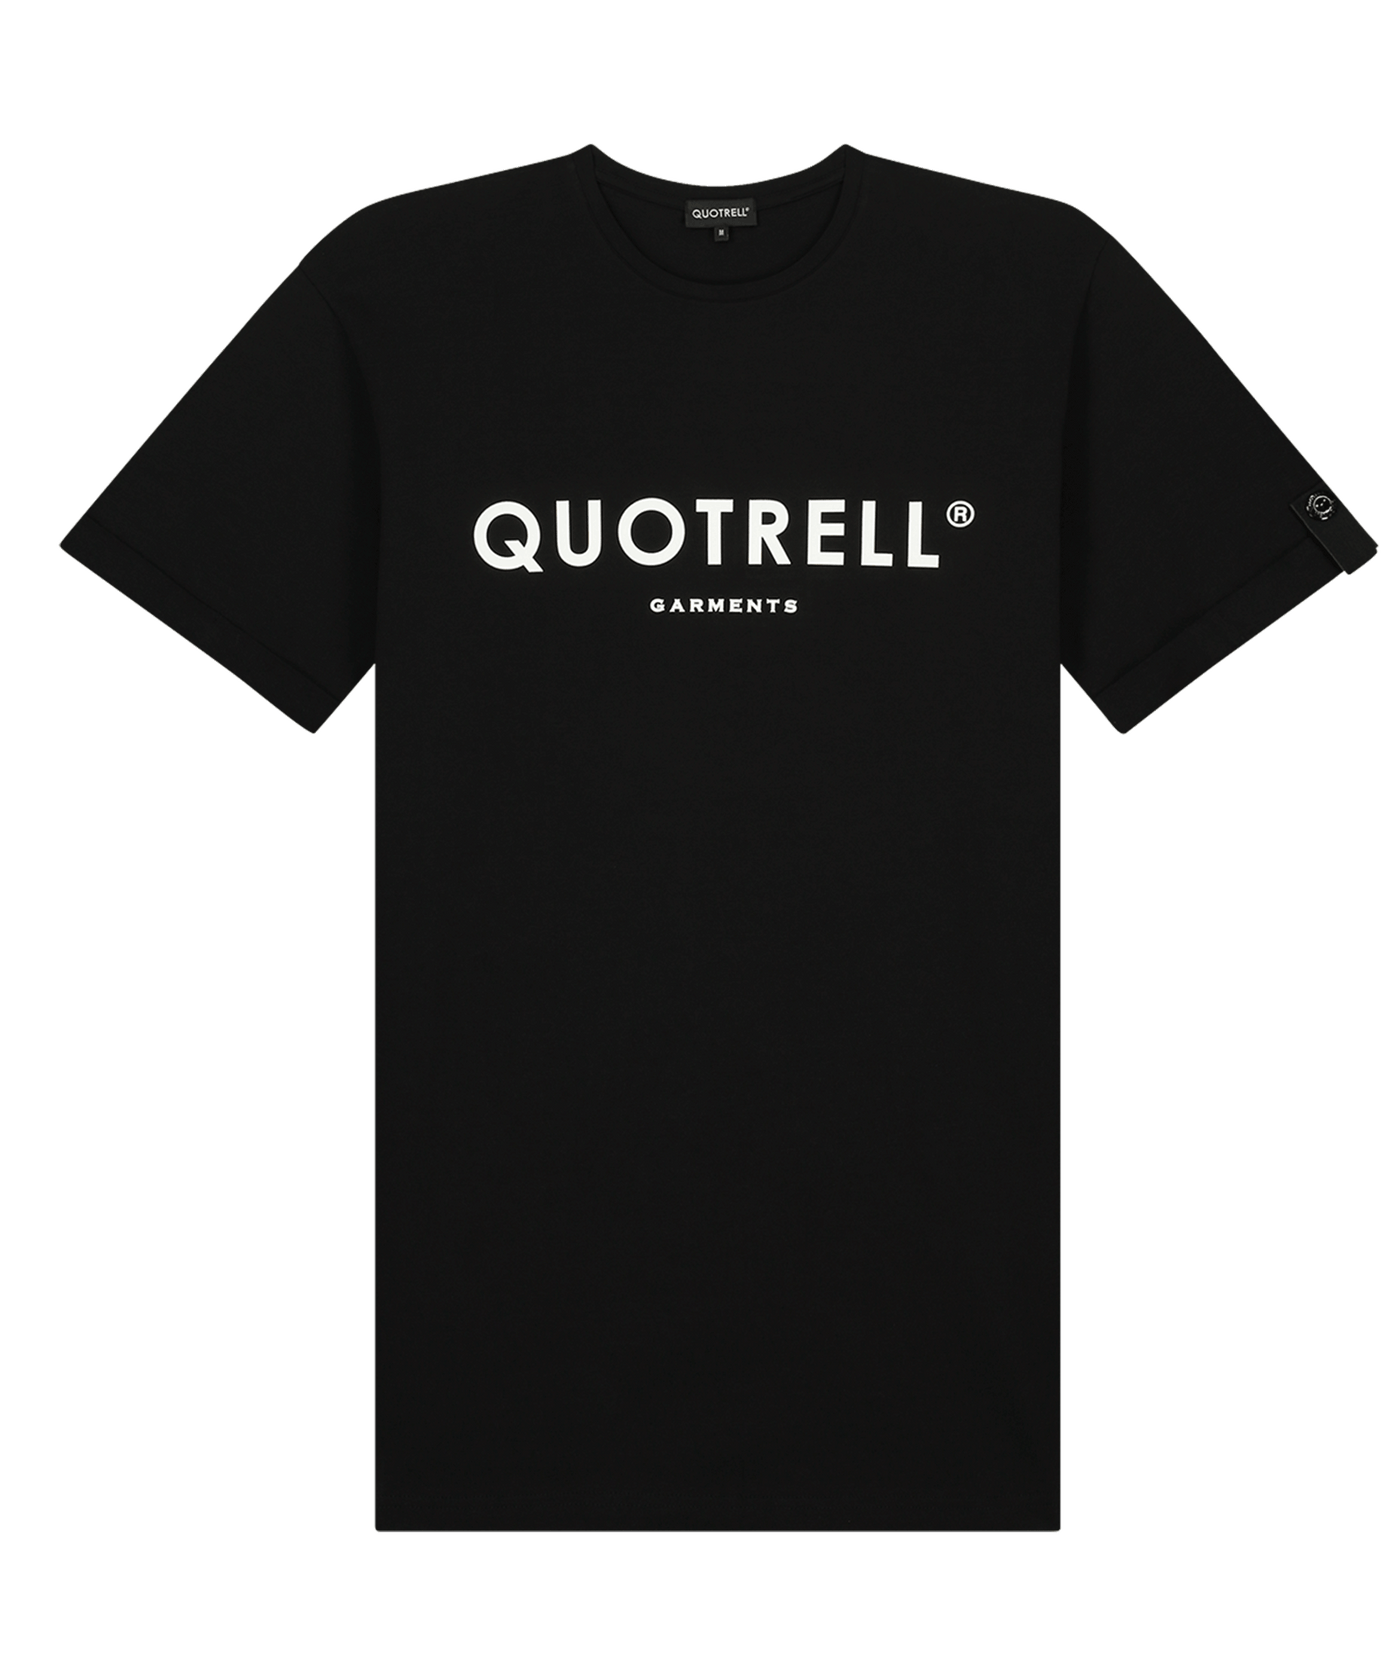 Quotrell - Basic Garments - T-shirt - Black/white